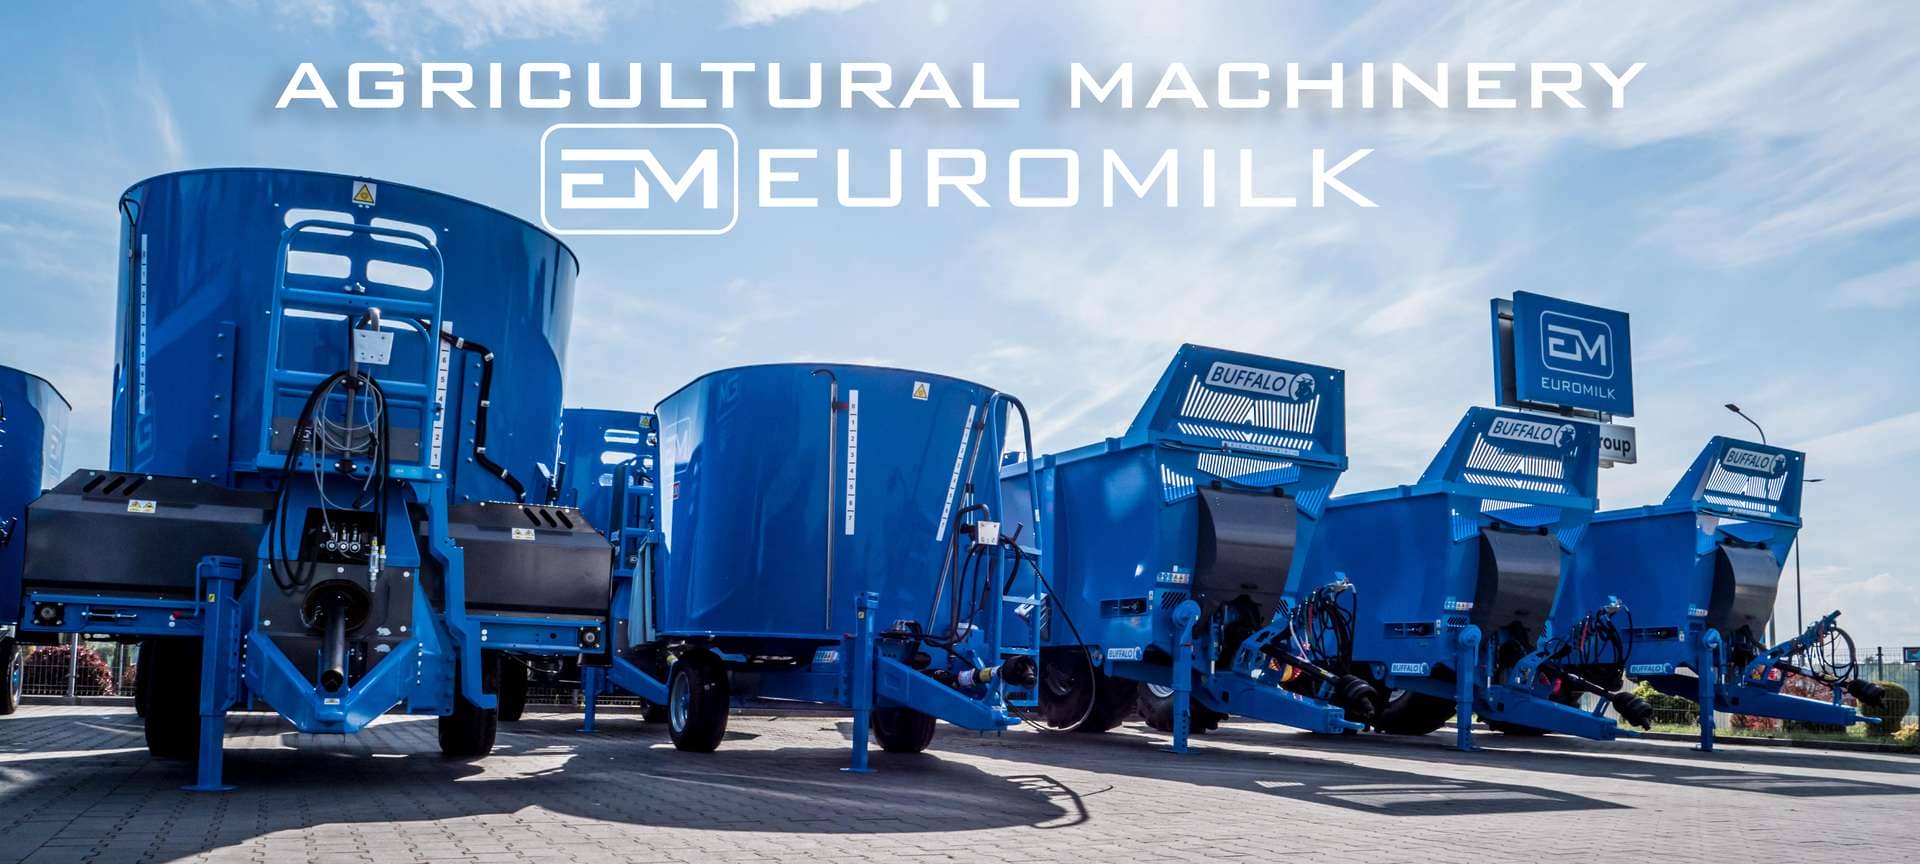 Park maszyn Euromilk